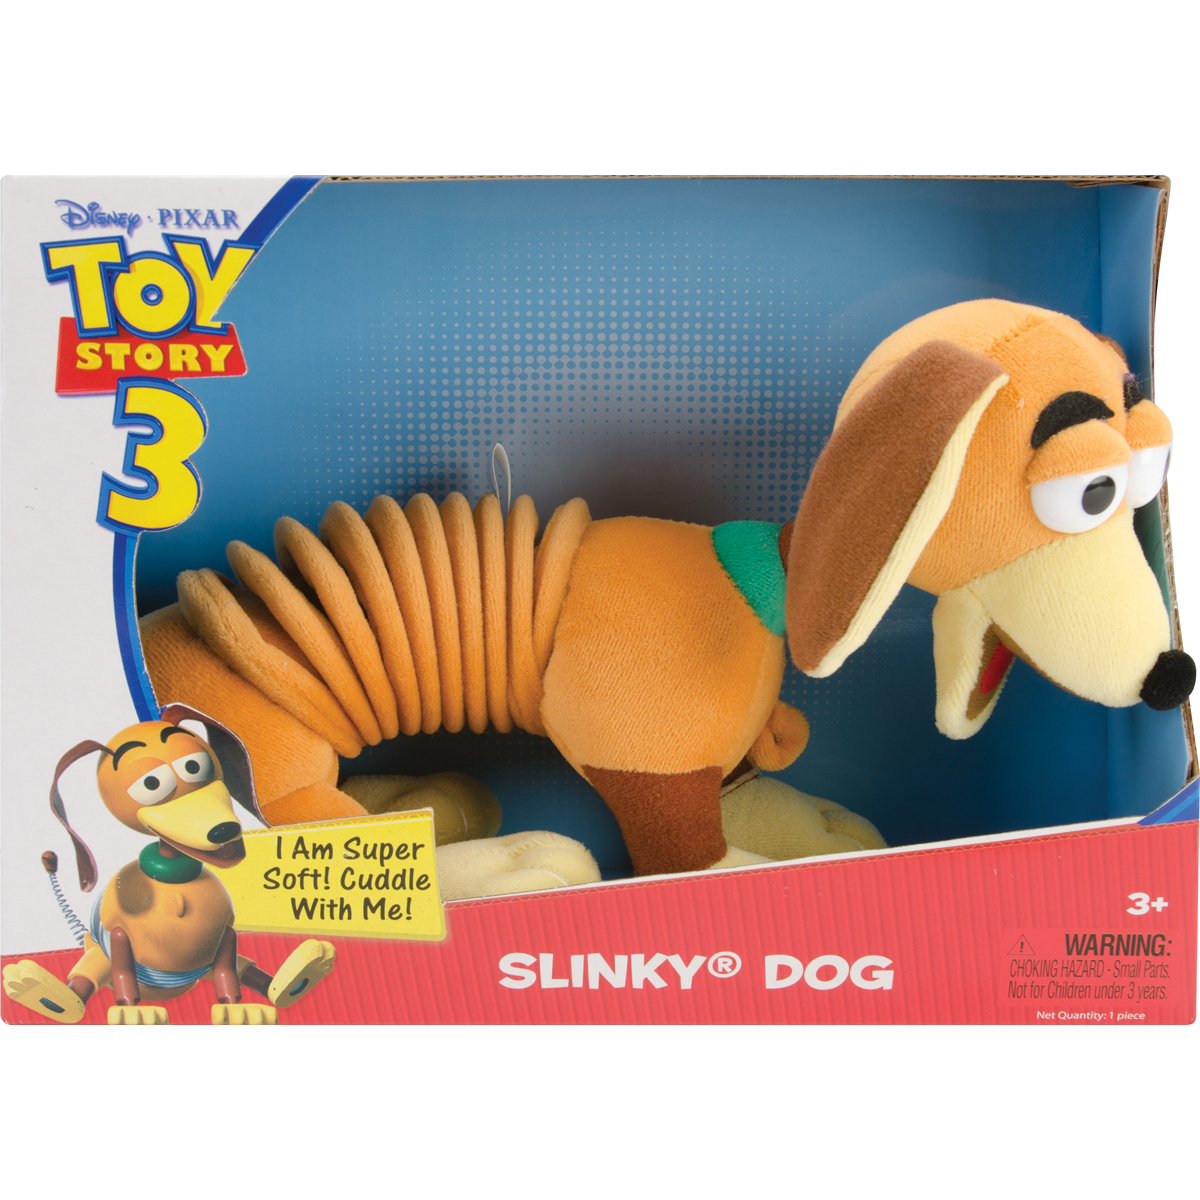 Slinky Disney Pixar Toy Story 3 Slinky Dog - image 1 of 3